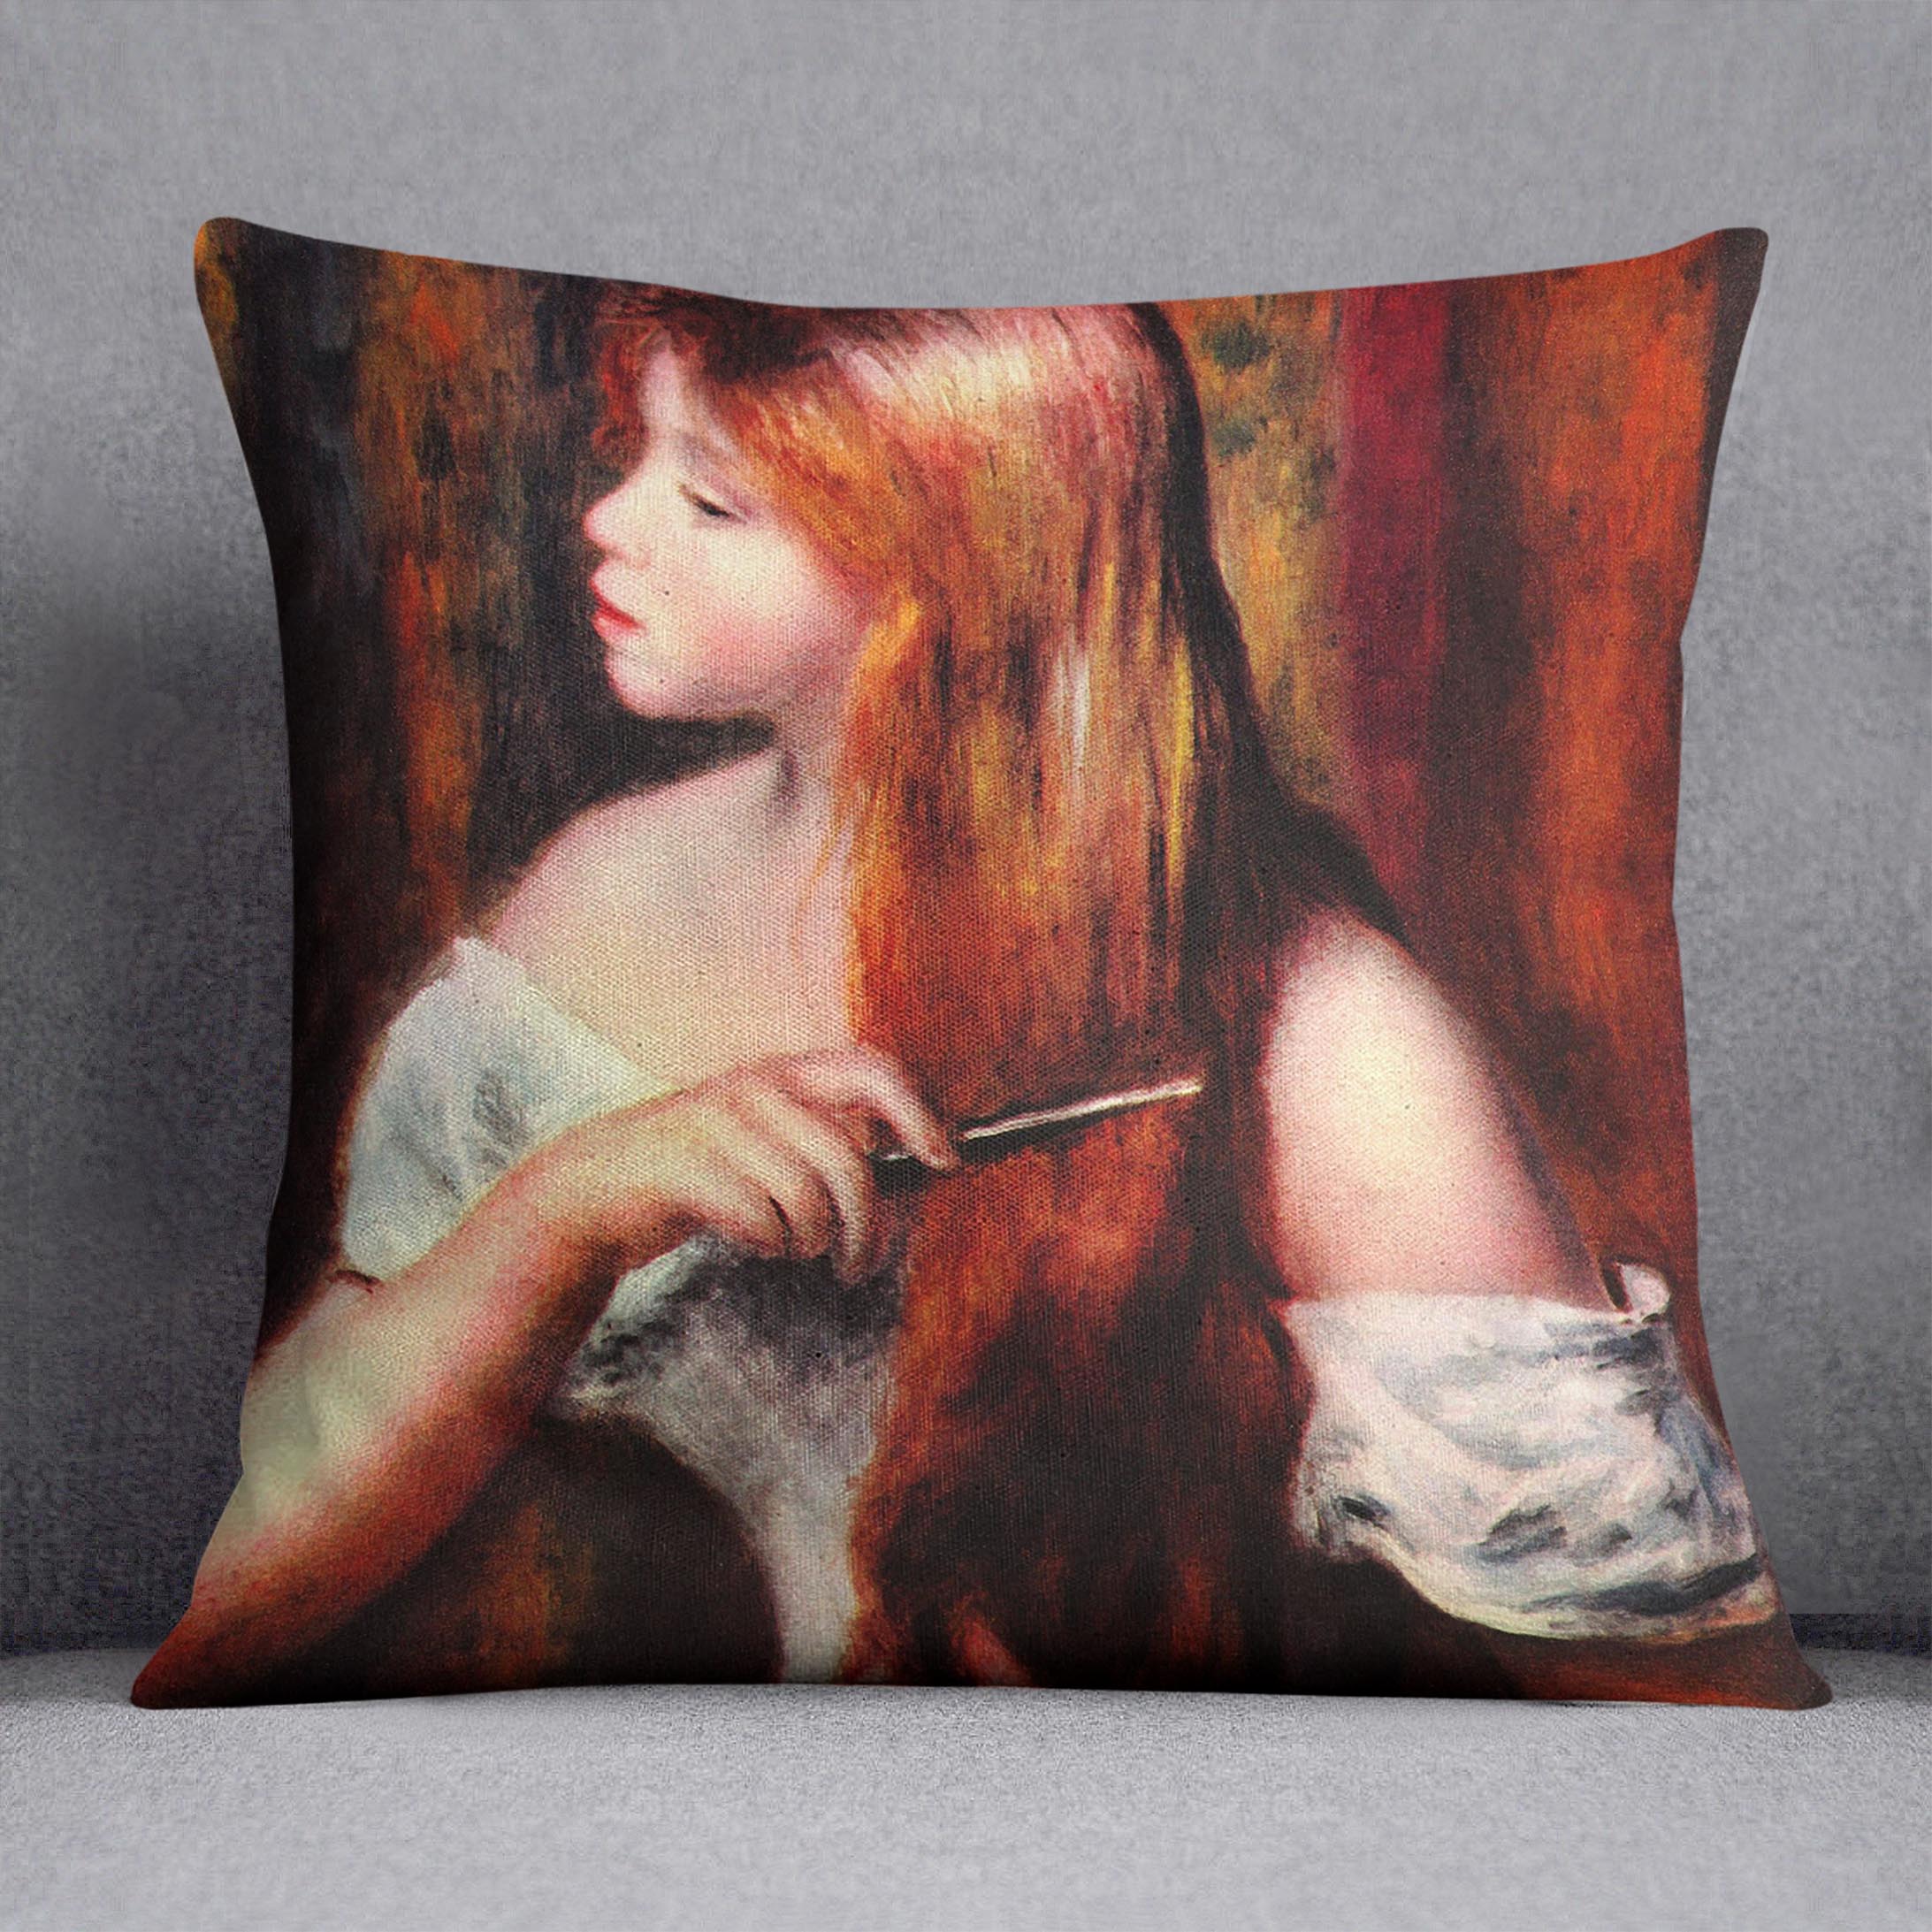 Combing girl by Renoir Cushion